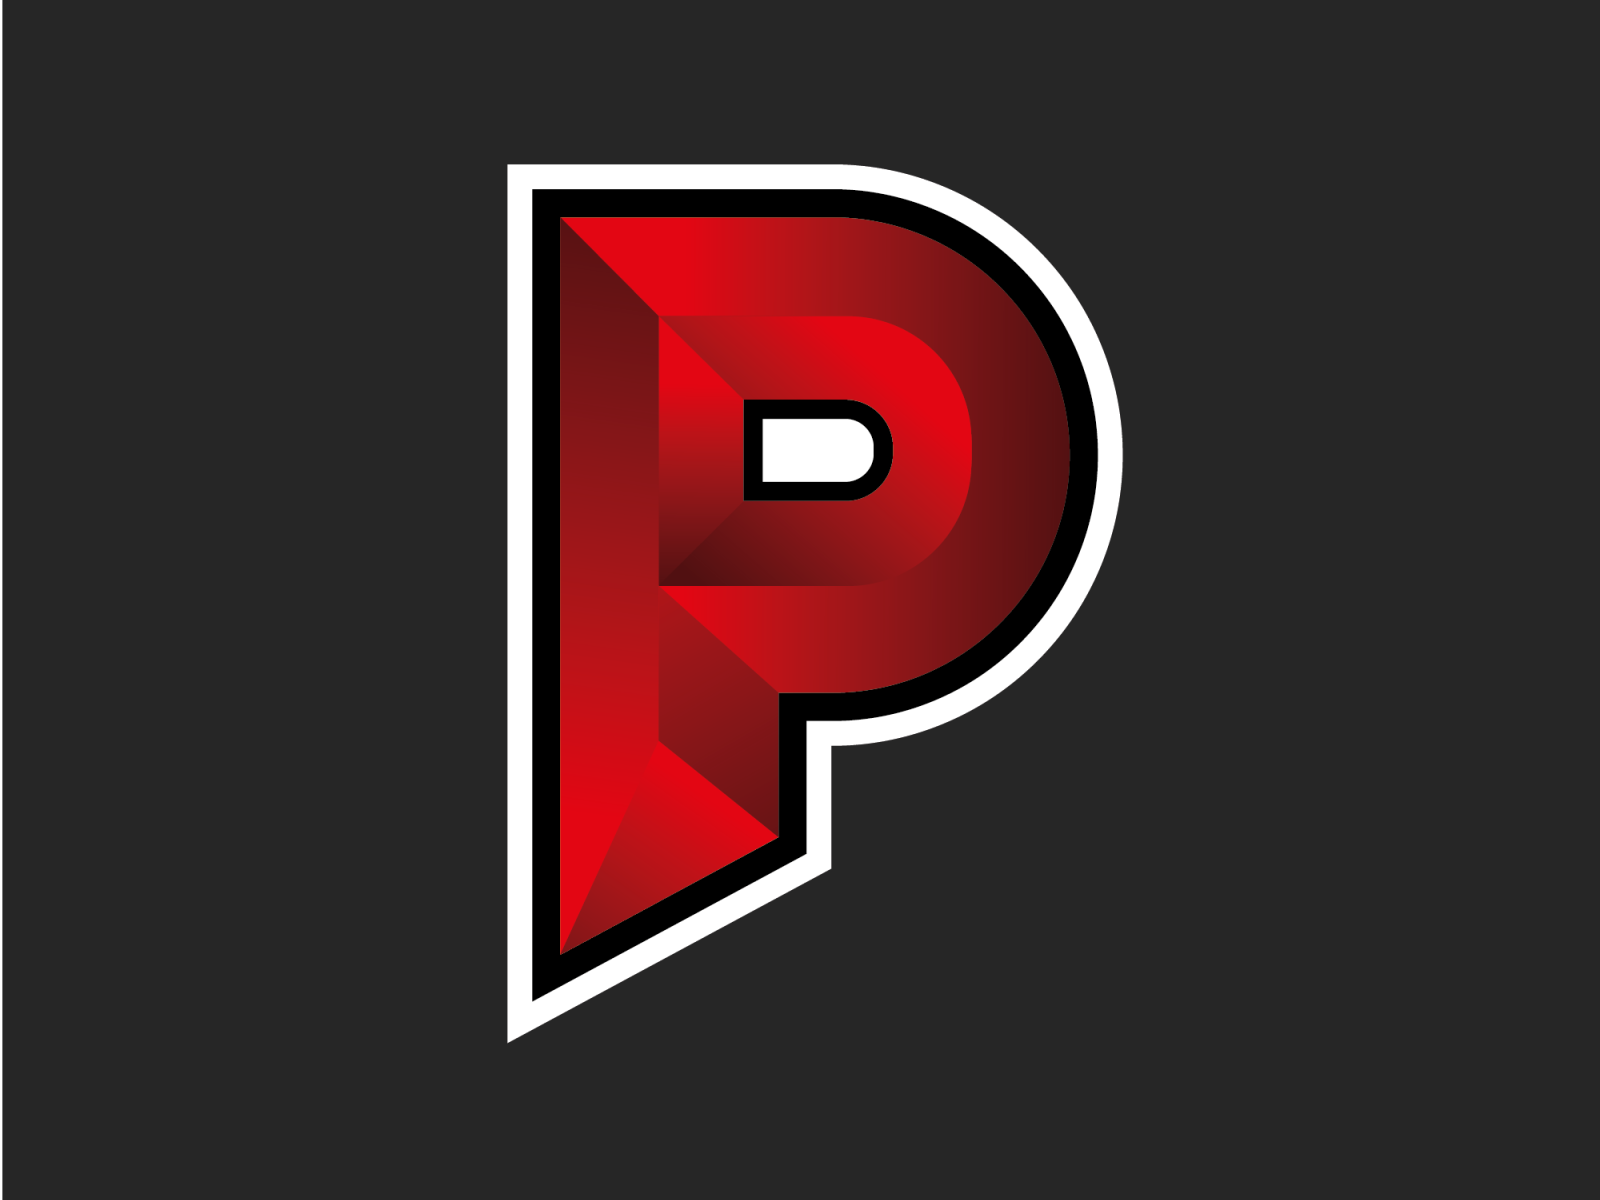 P Logo Esports by Dylan van Beem on Dribbble